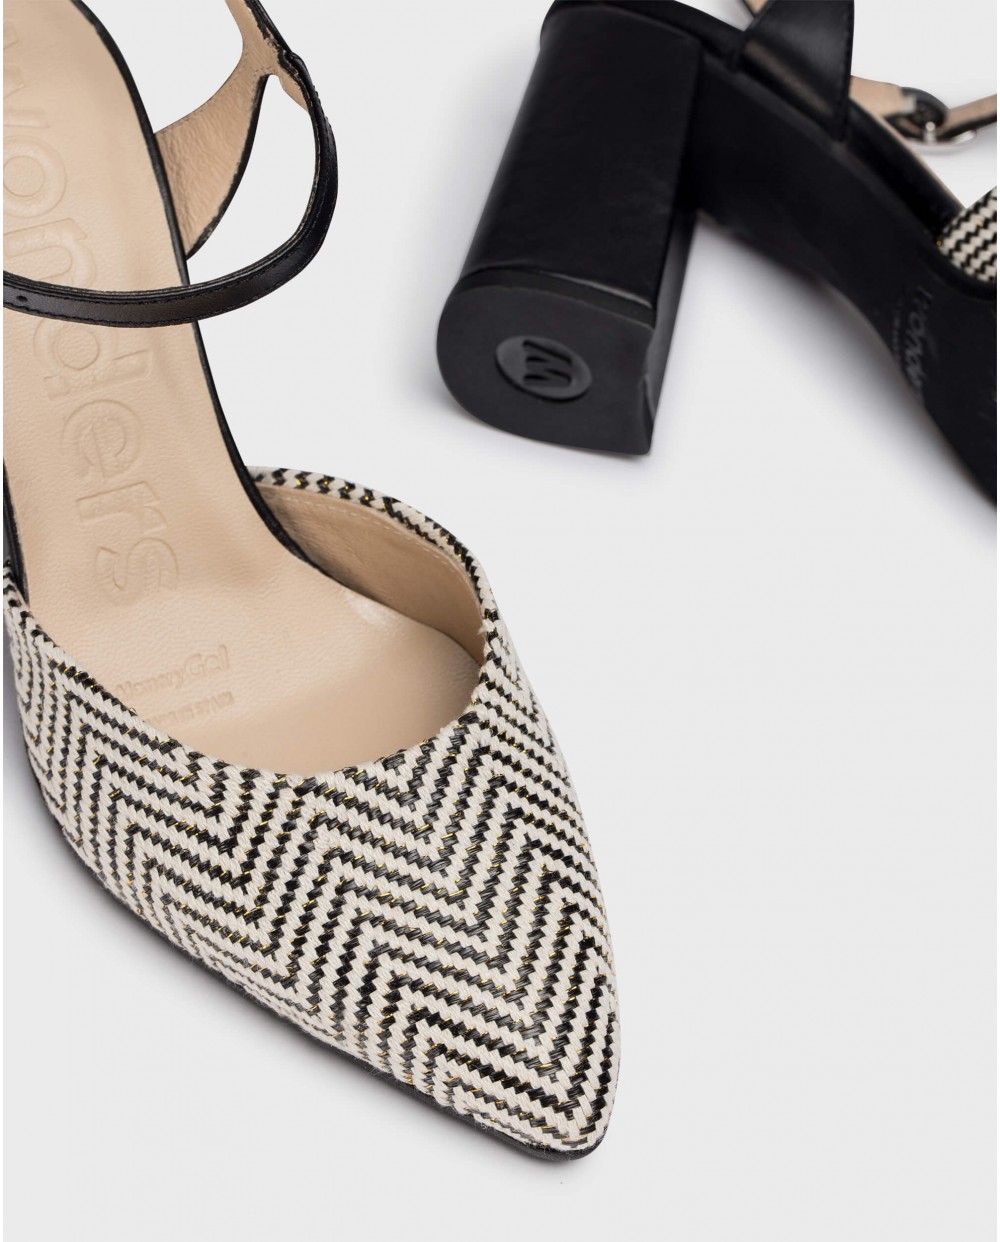 Mariel high-heeled shoe